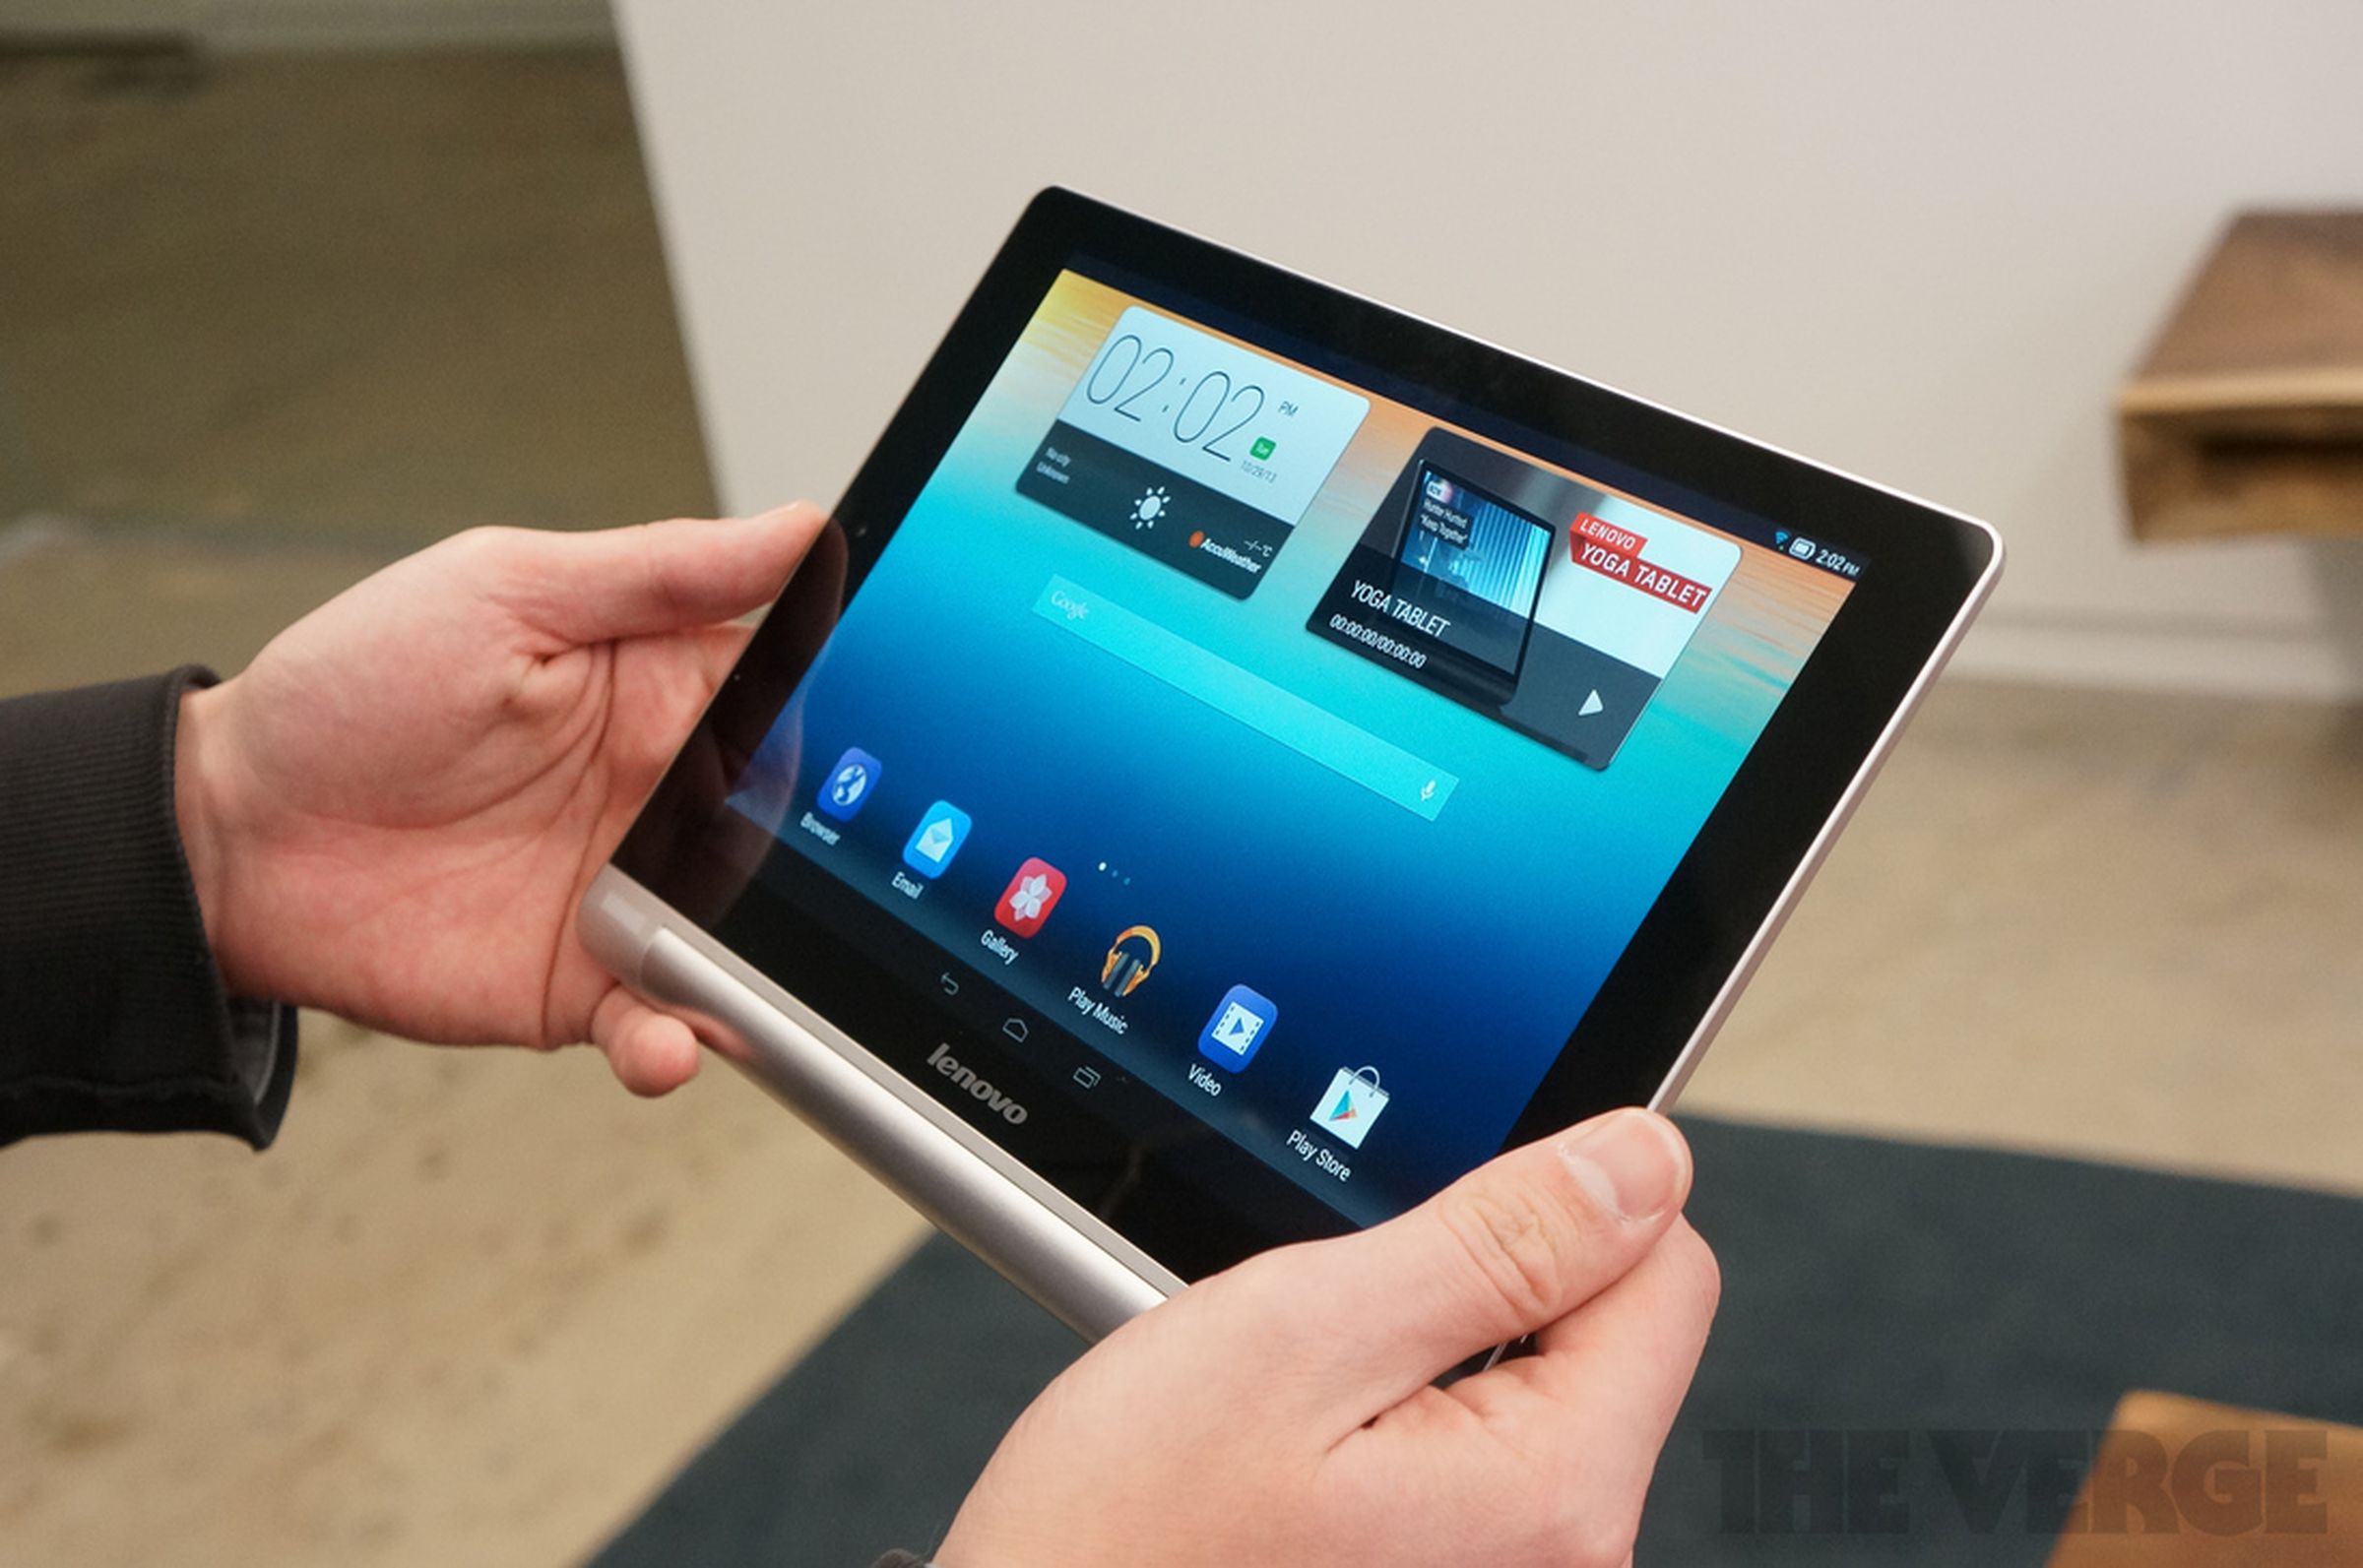 Lenovo Yoga Tablet hands-on